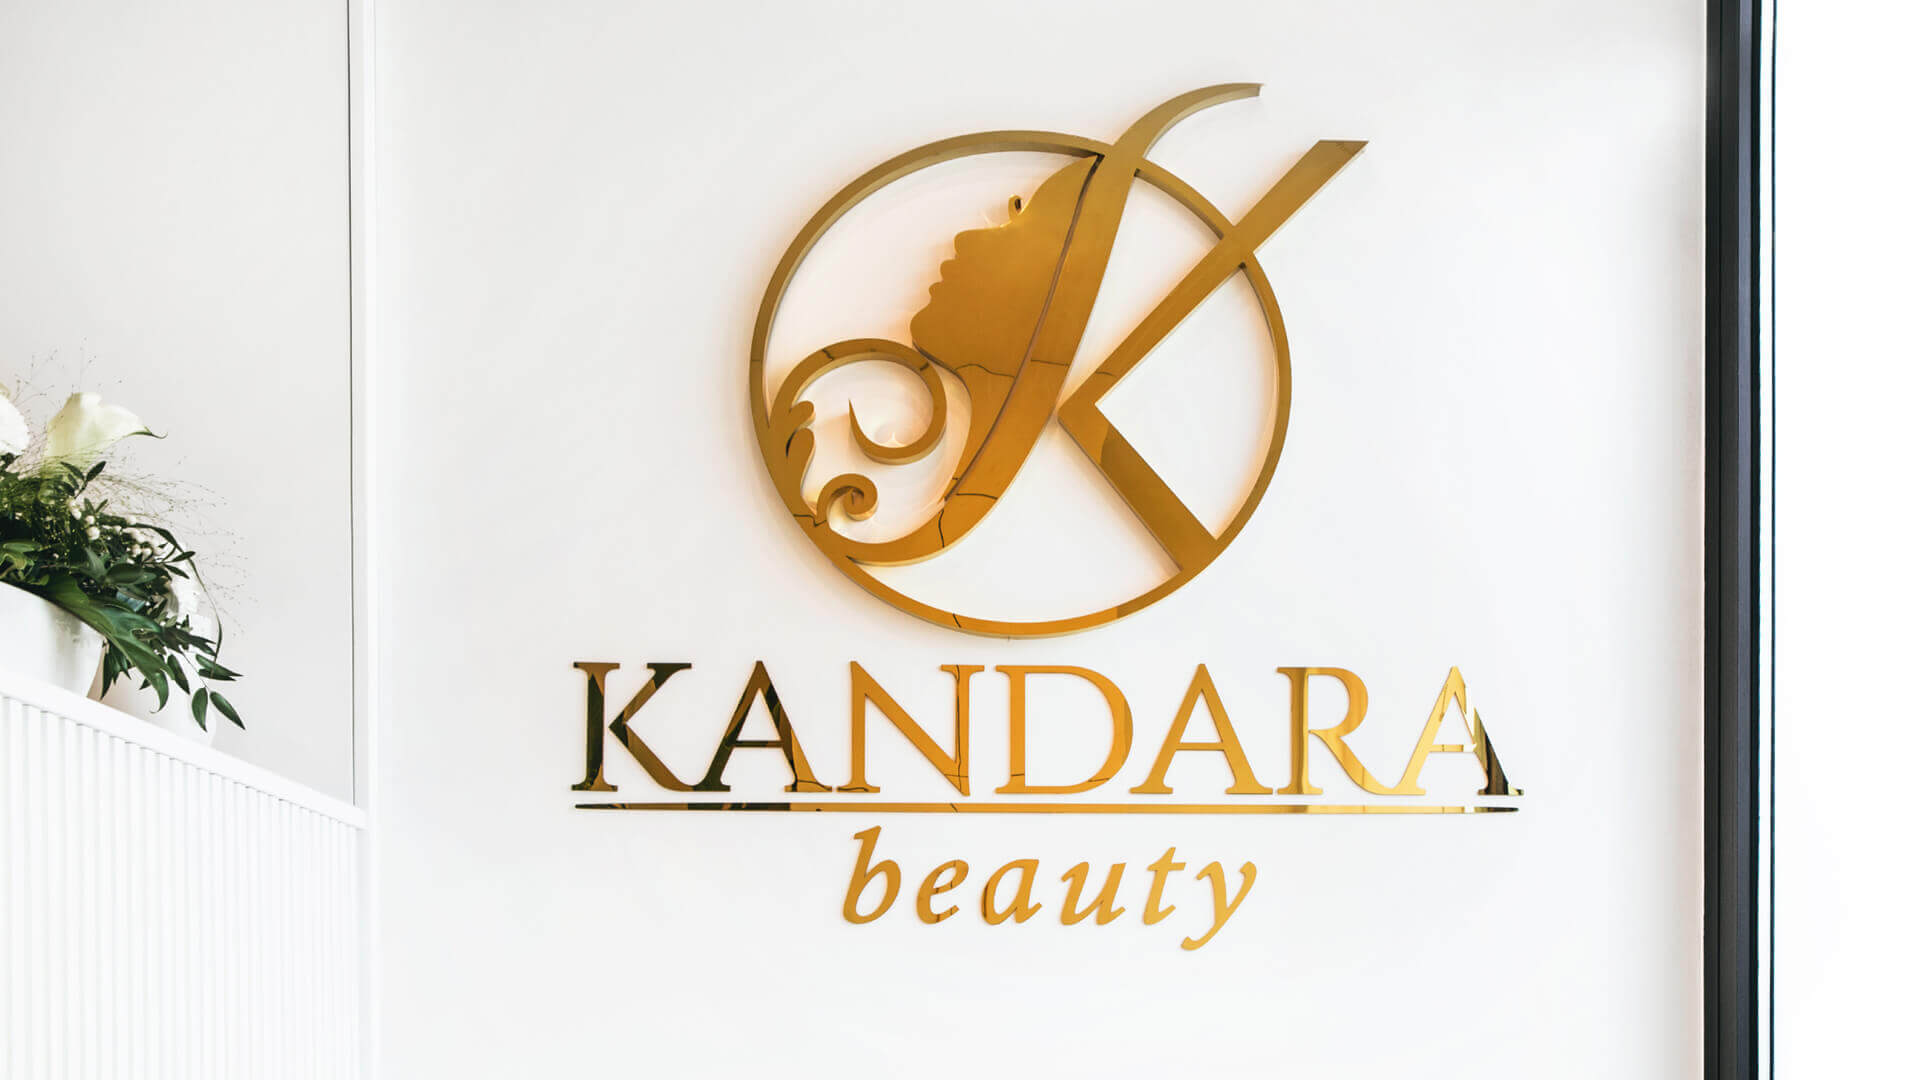 Kandara Schönheit - Logo mit Namen aus goldfarbenem Edelstahl.